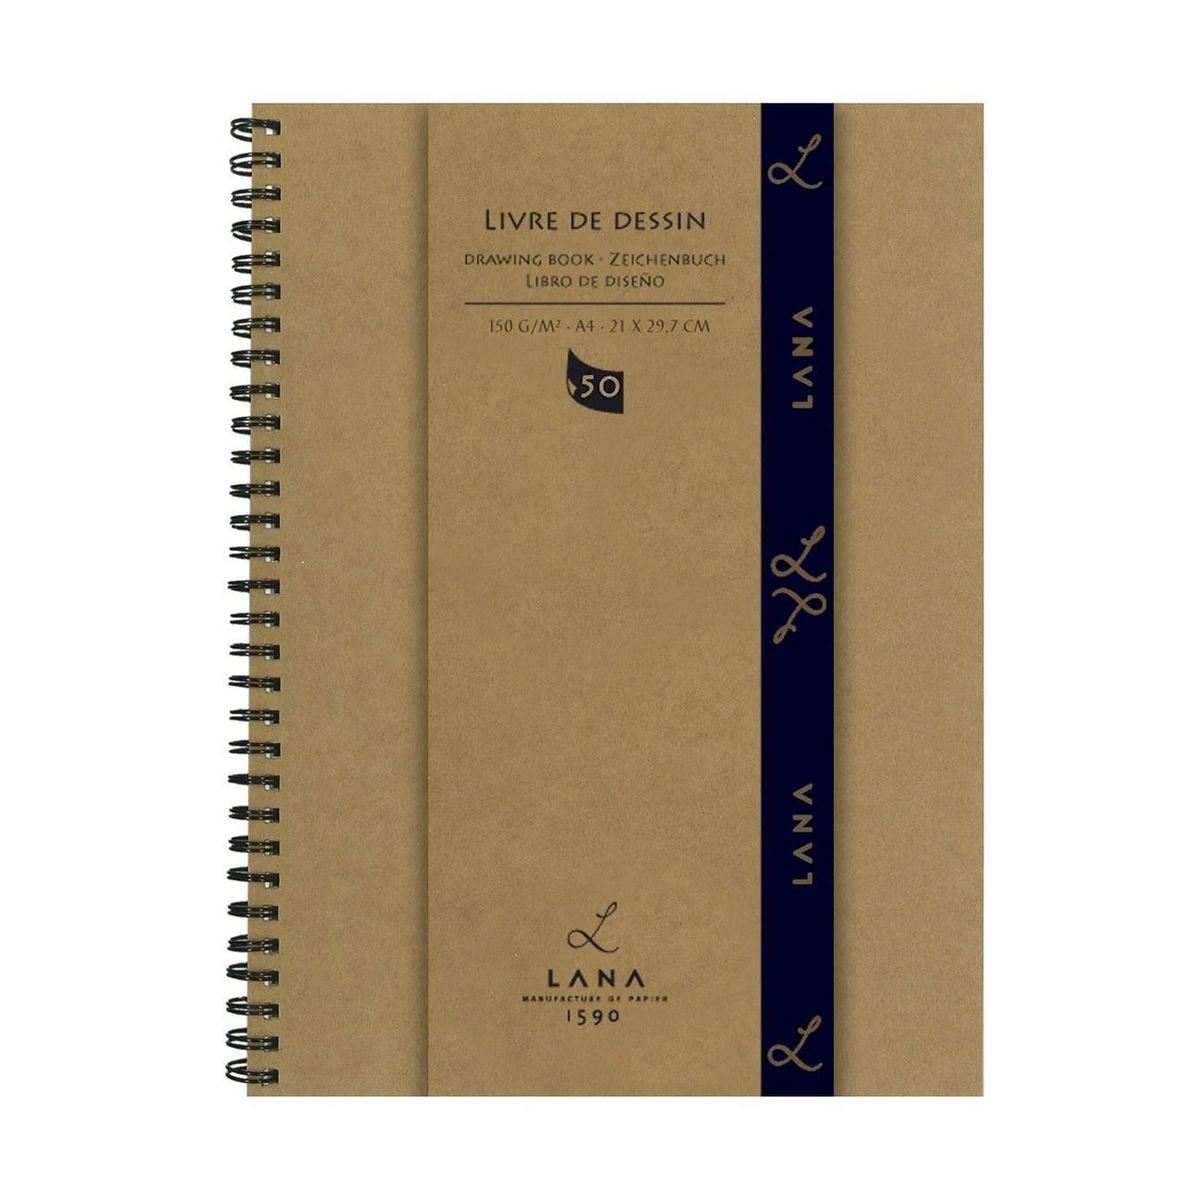 Sketchbook Lana Livre De Dessin A4 150g/m² 50 Folhas 